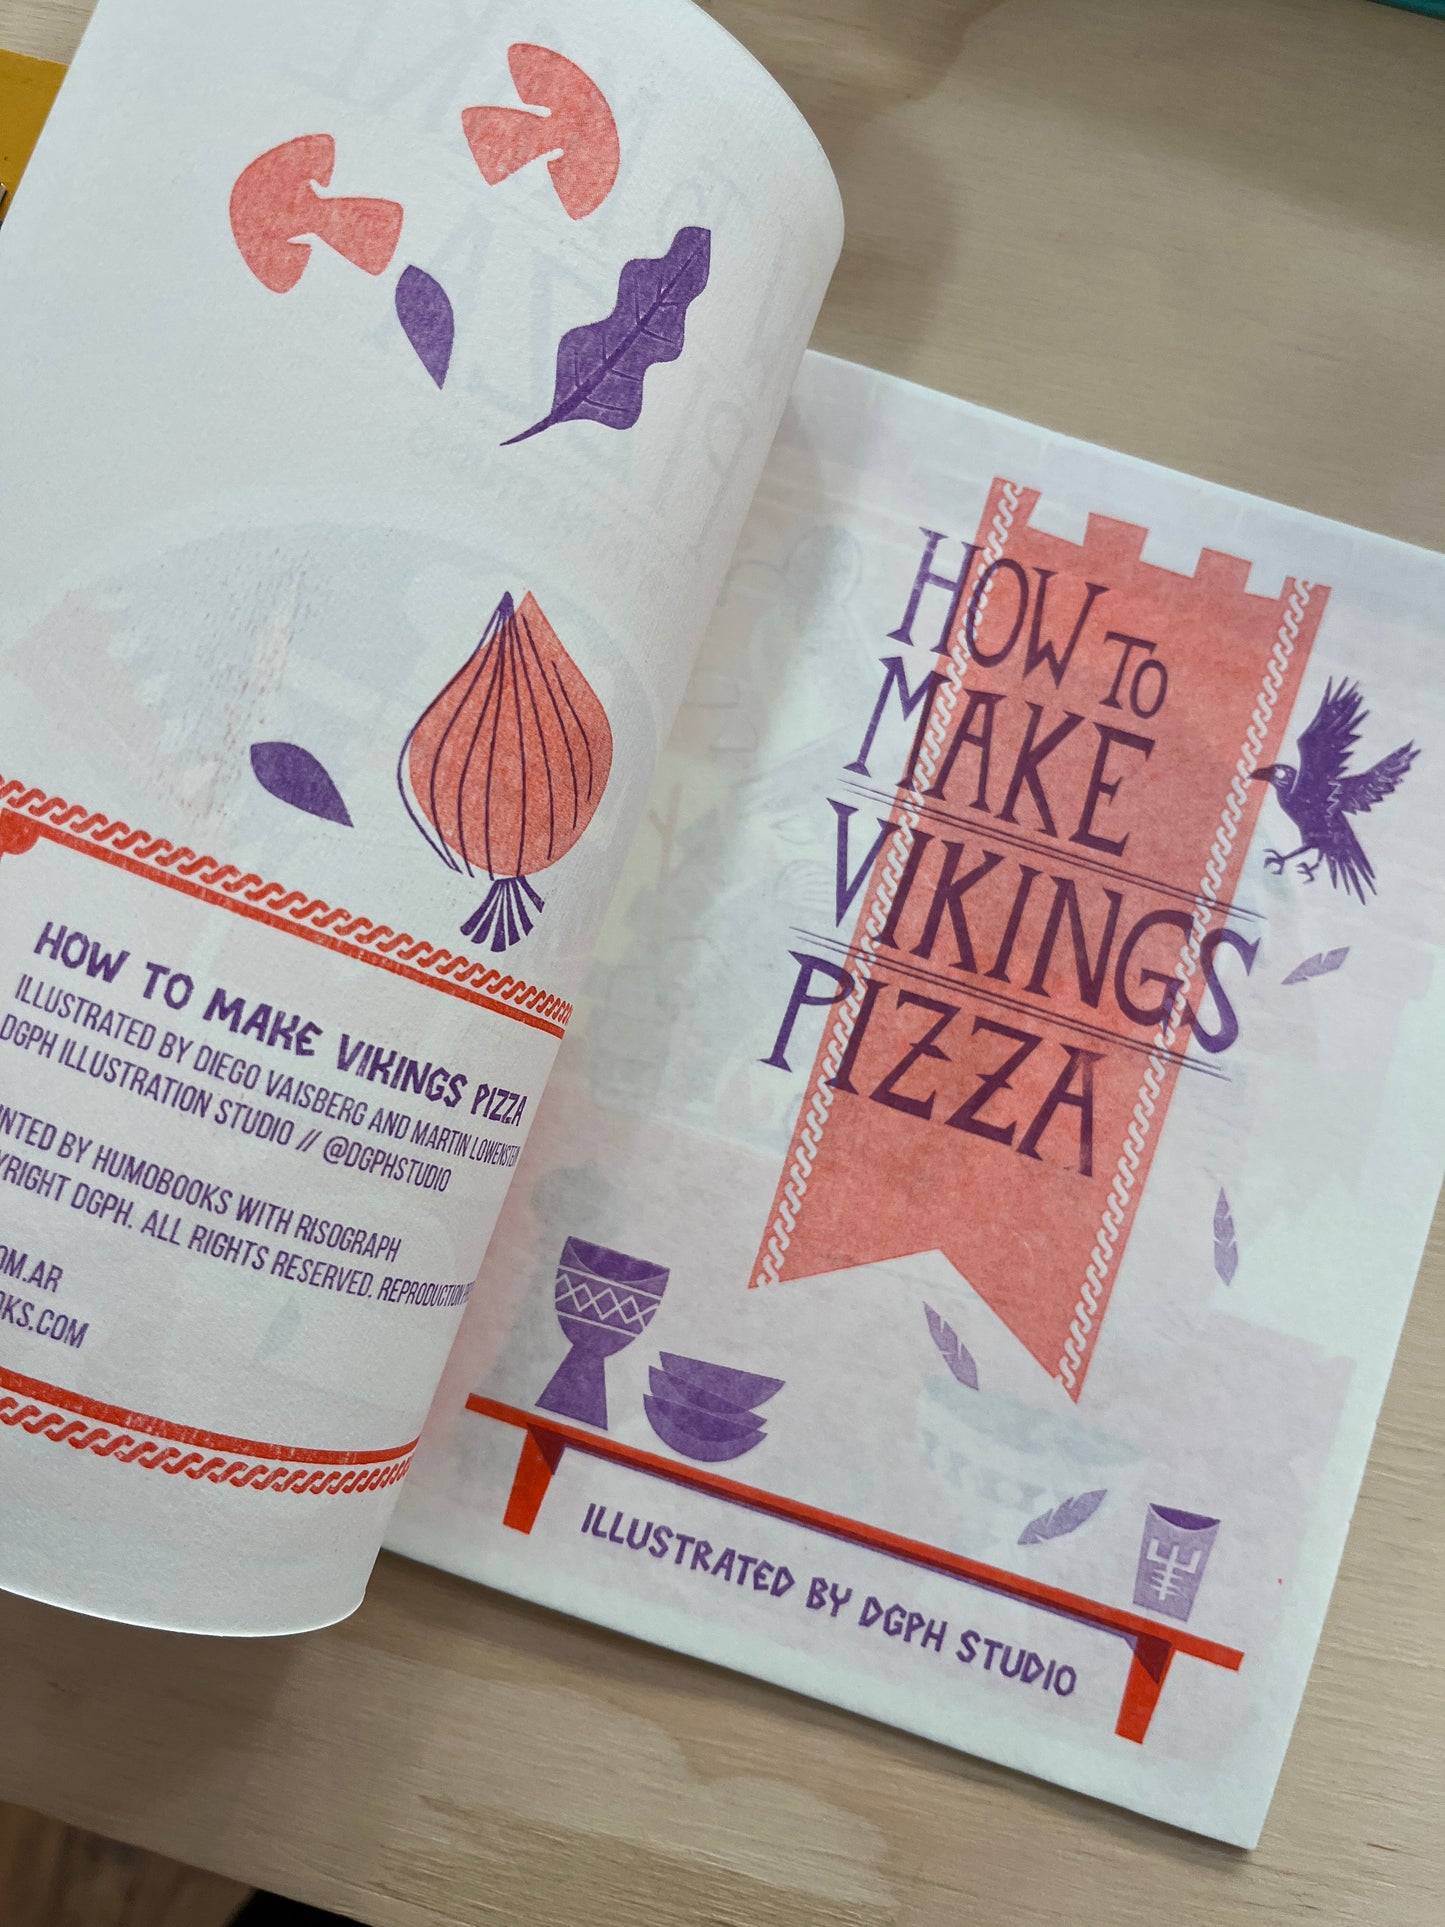 HOW TO MAKE VIKINGS PIZZA